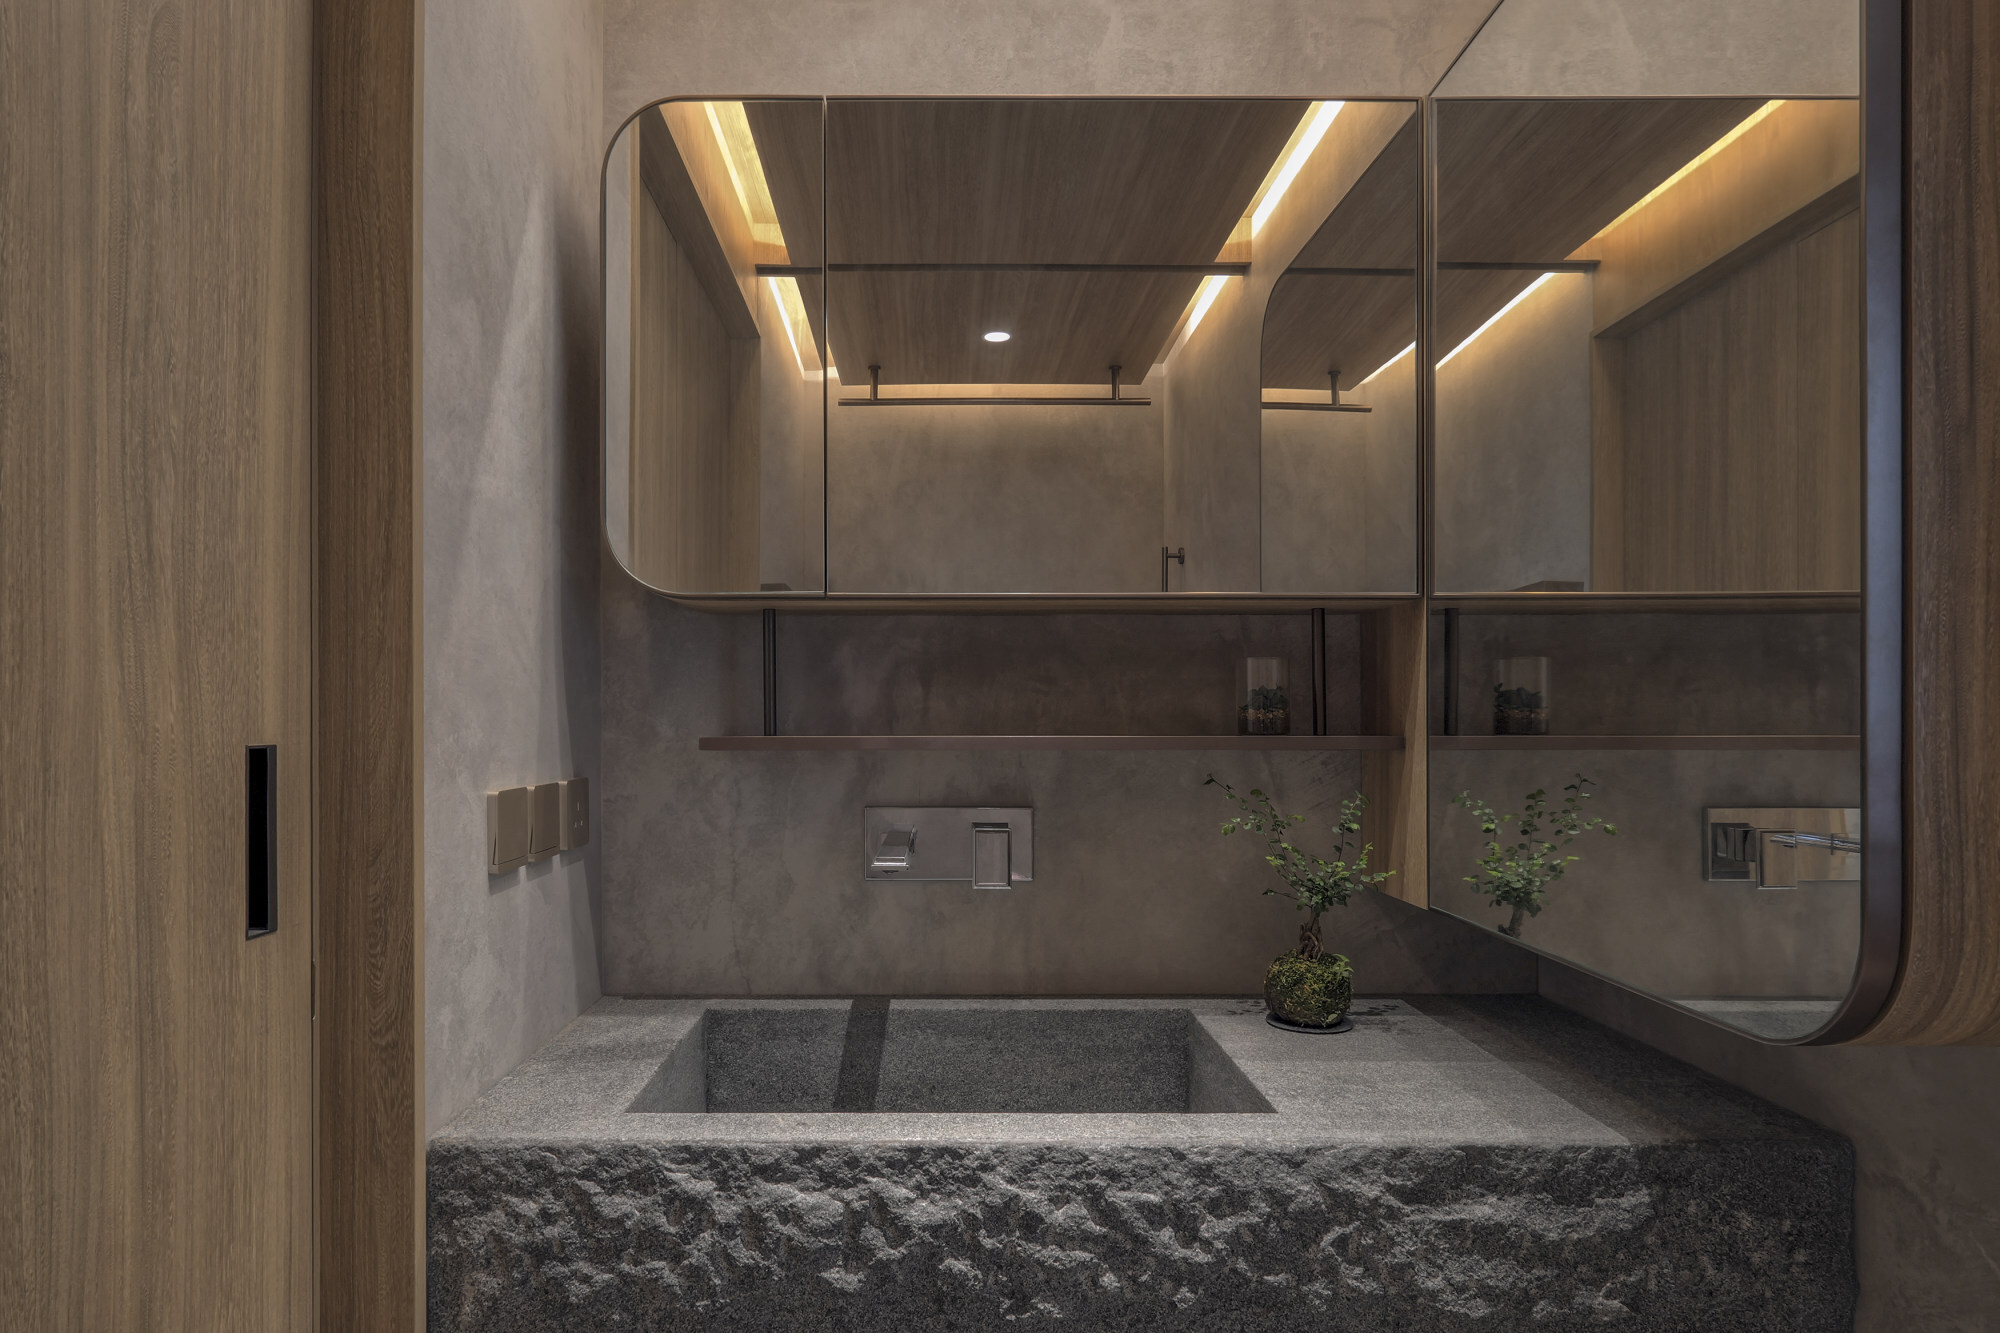 Japanese minimalism, soft lighting and a spa-like bathroom transform a Hong  Kong apartment into a calming sanctuary | South China Morning Post